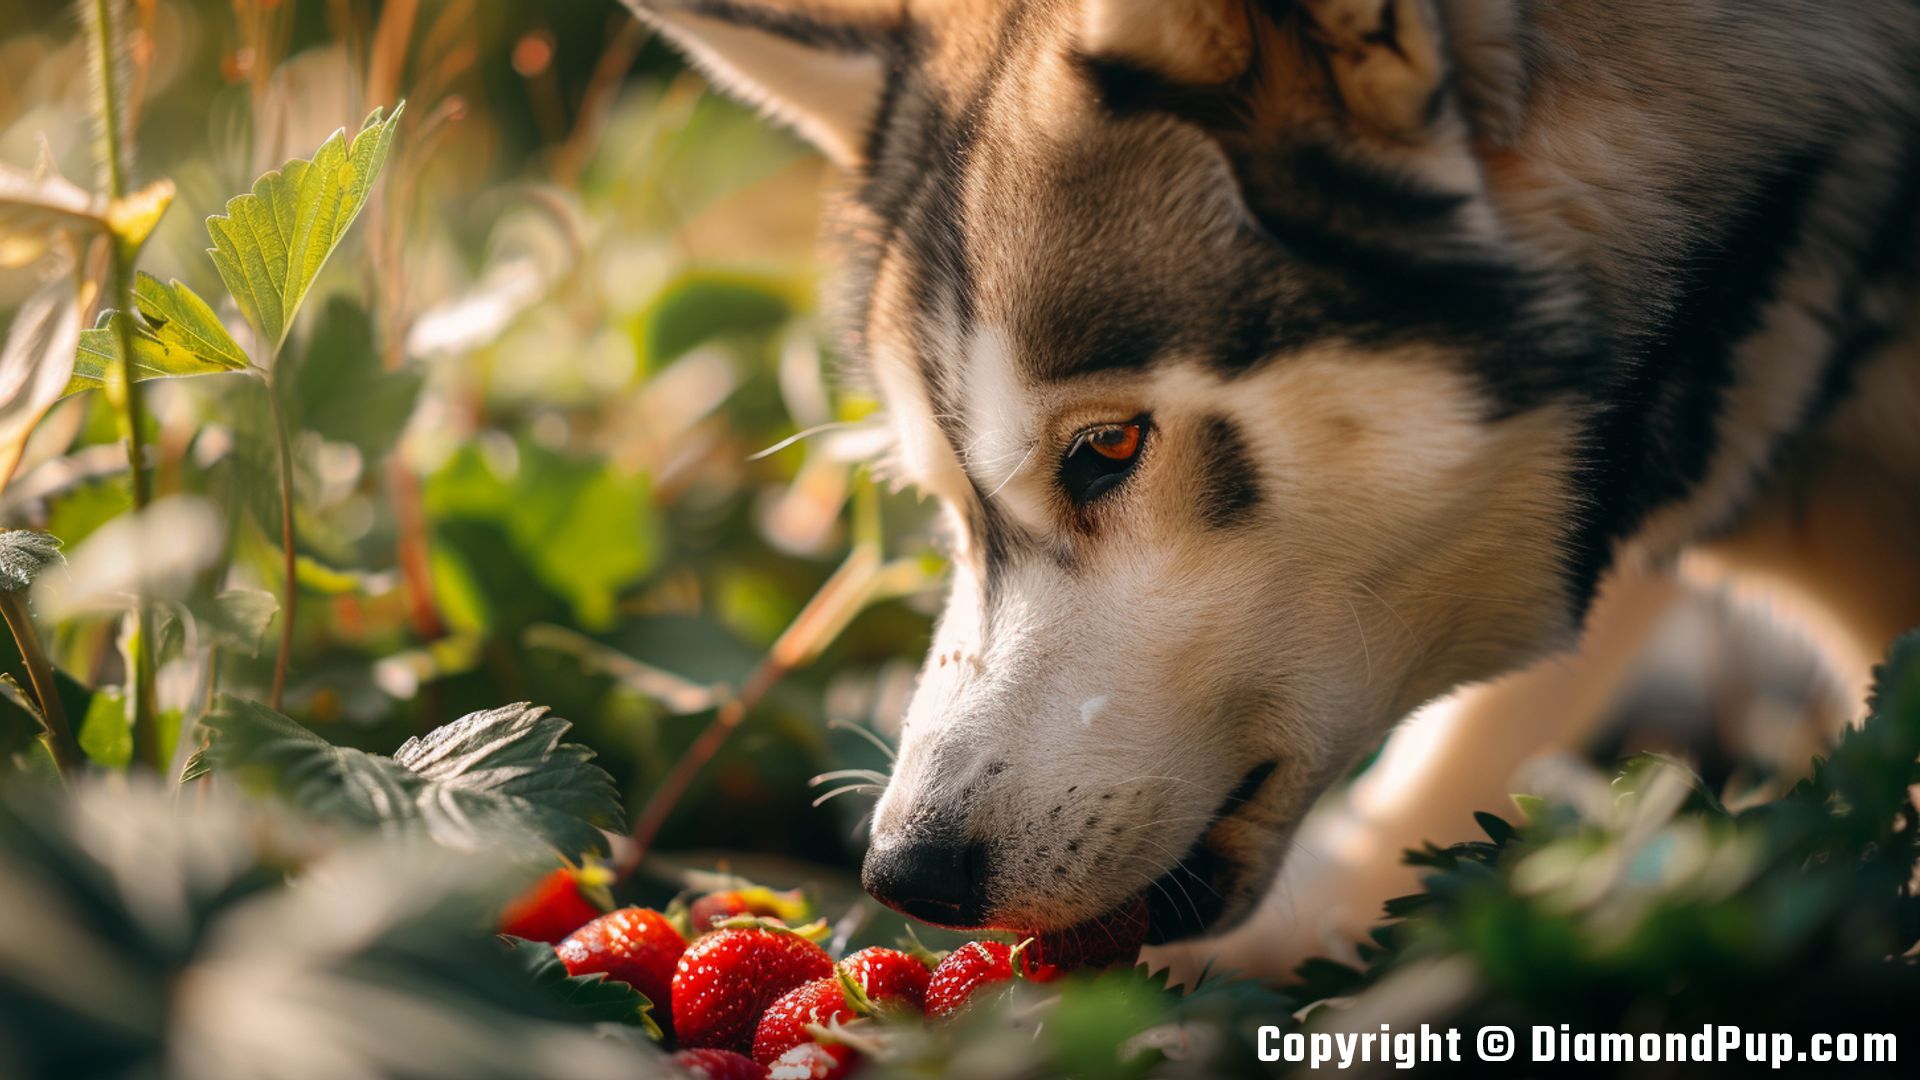 Photograph of Husky Eating Strawberries